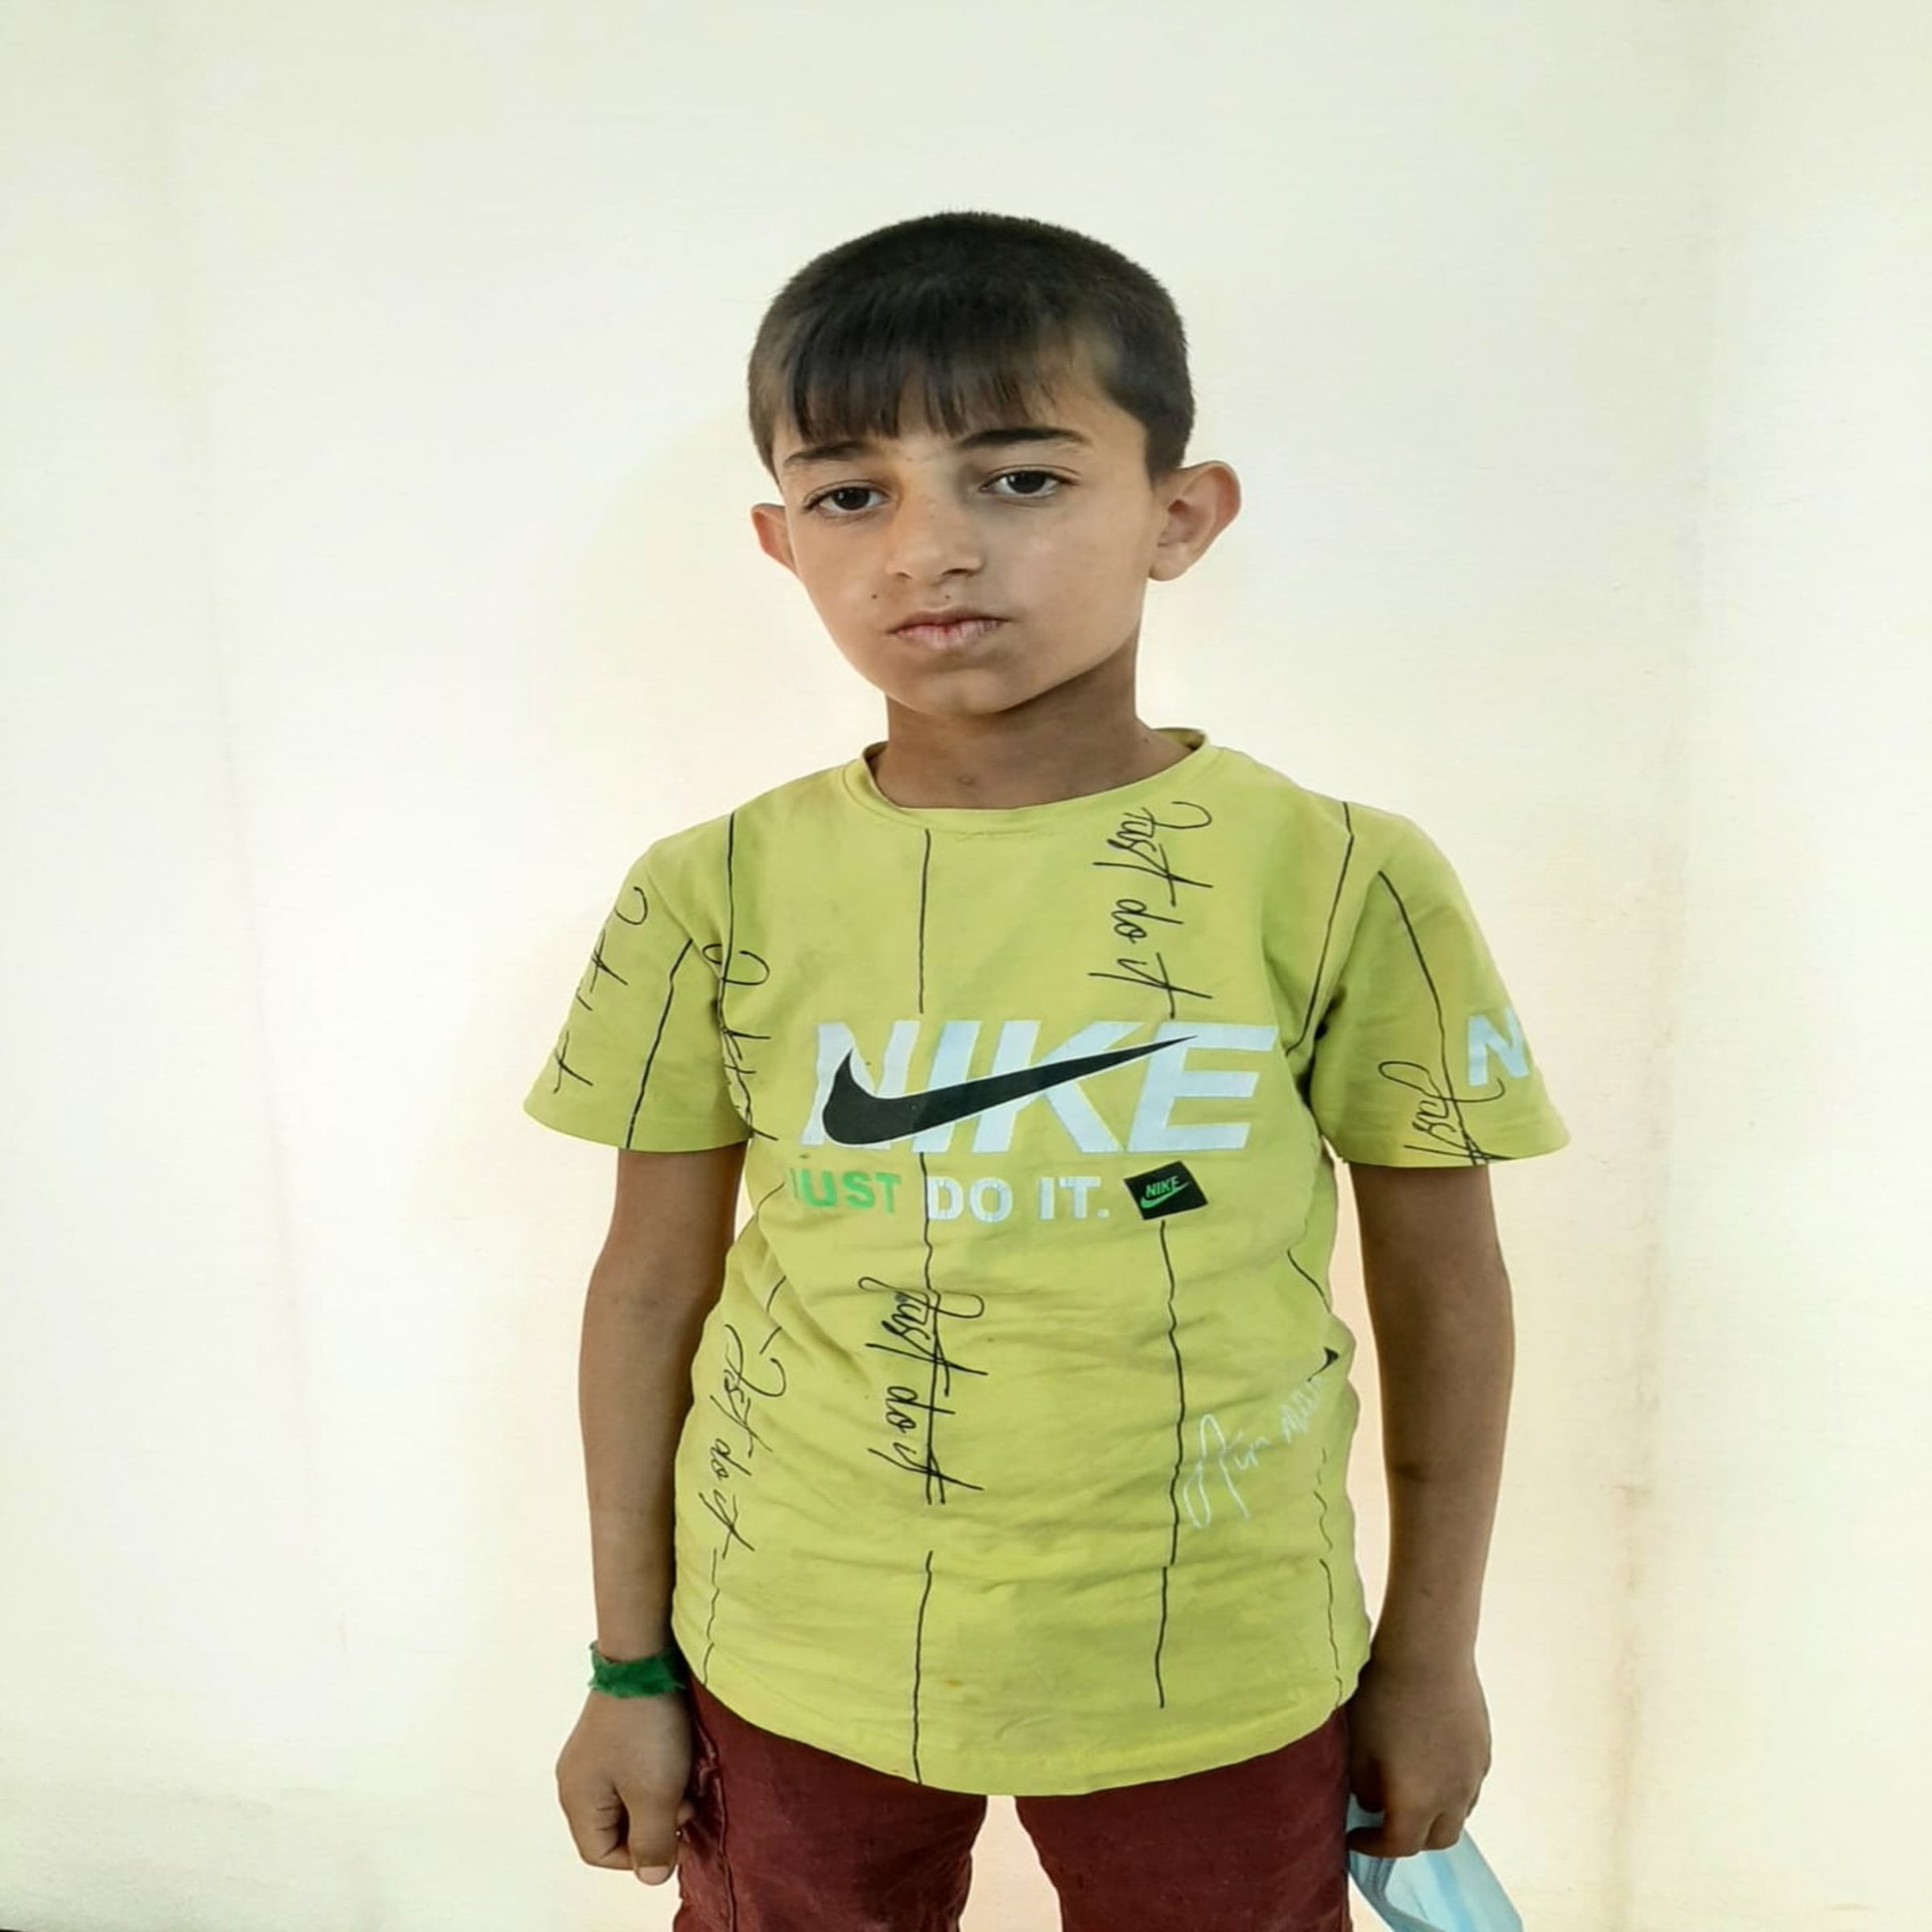 Human Appeal Orphan - yousif tahsen